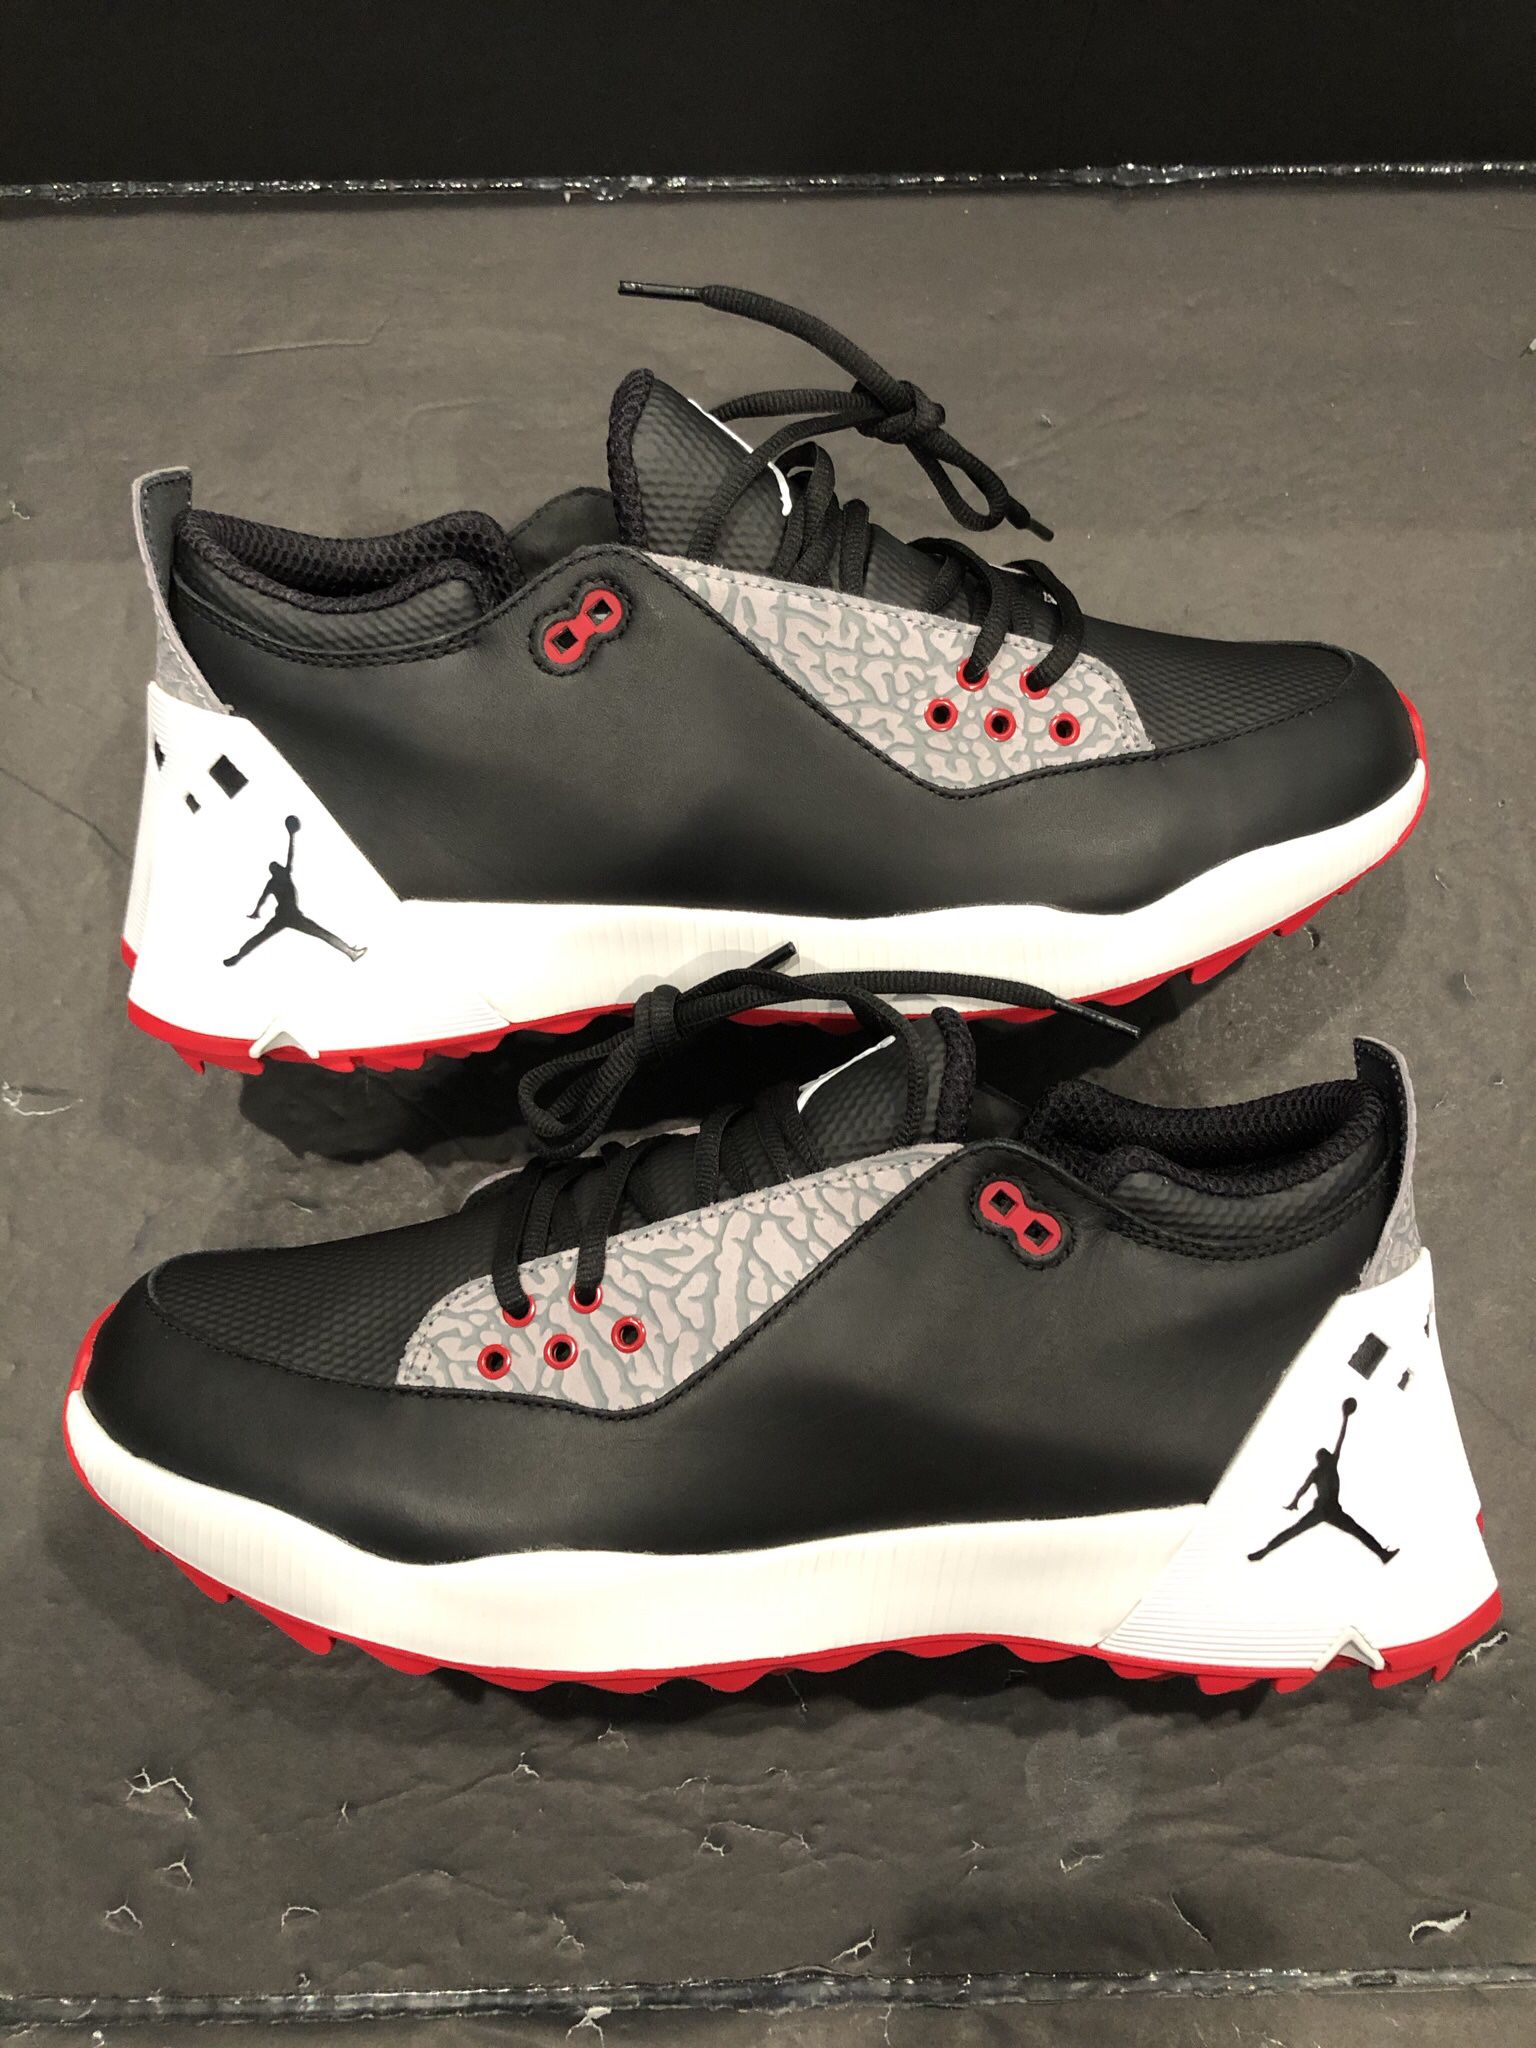 Nike Air Jordan ADG 2 “Black Cement” Golf Shoes Size 11 for Sale